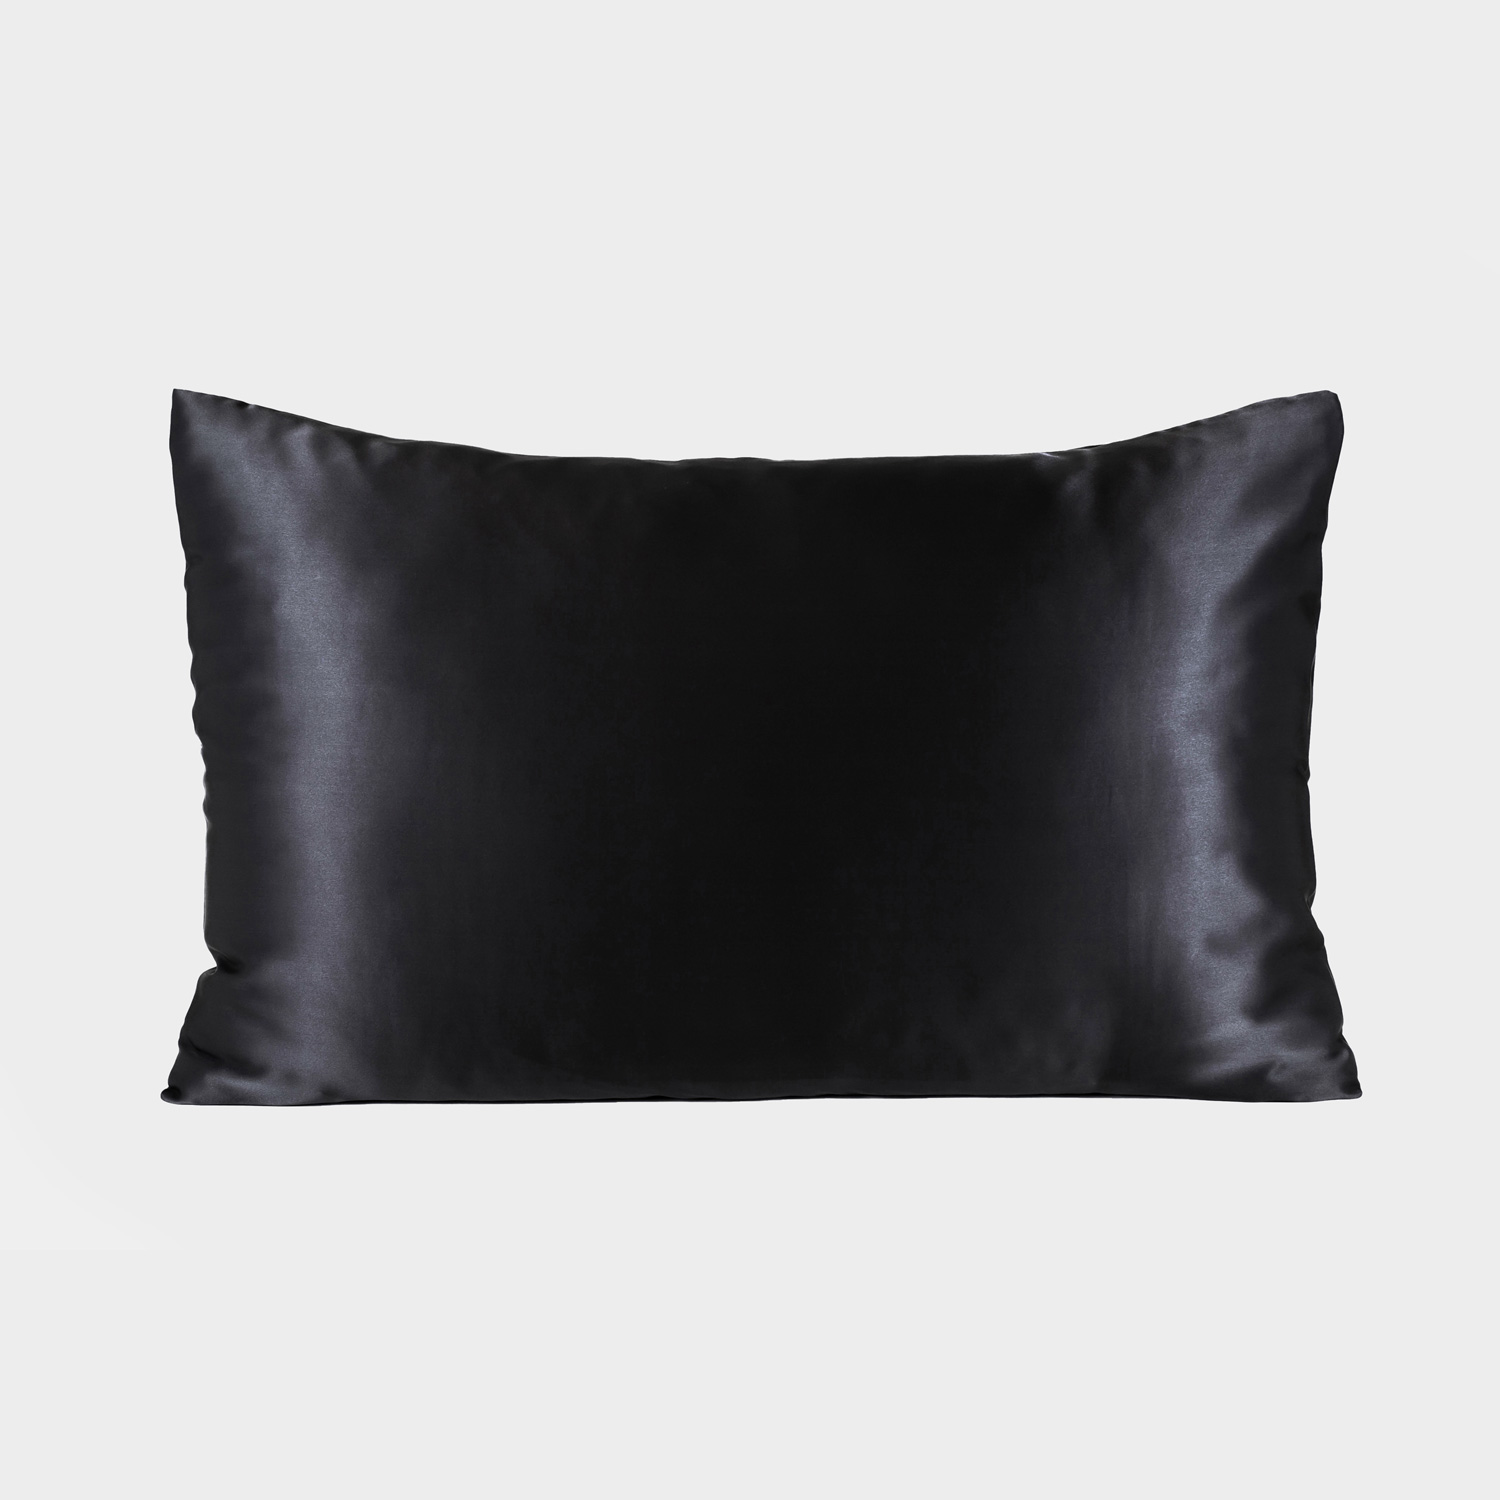 Charcoal pillow case